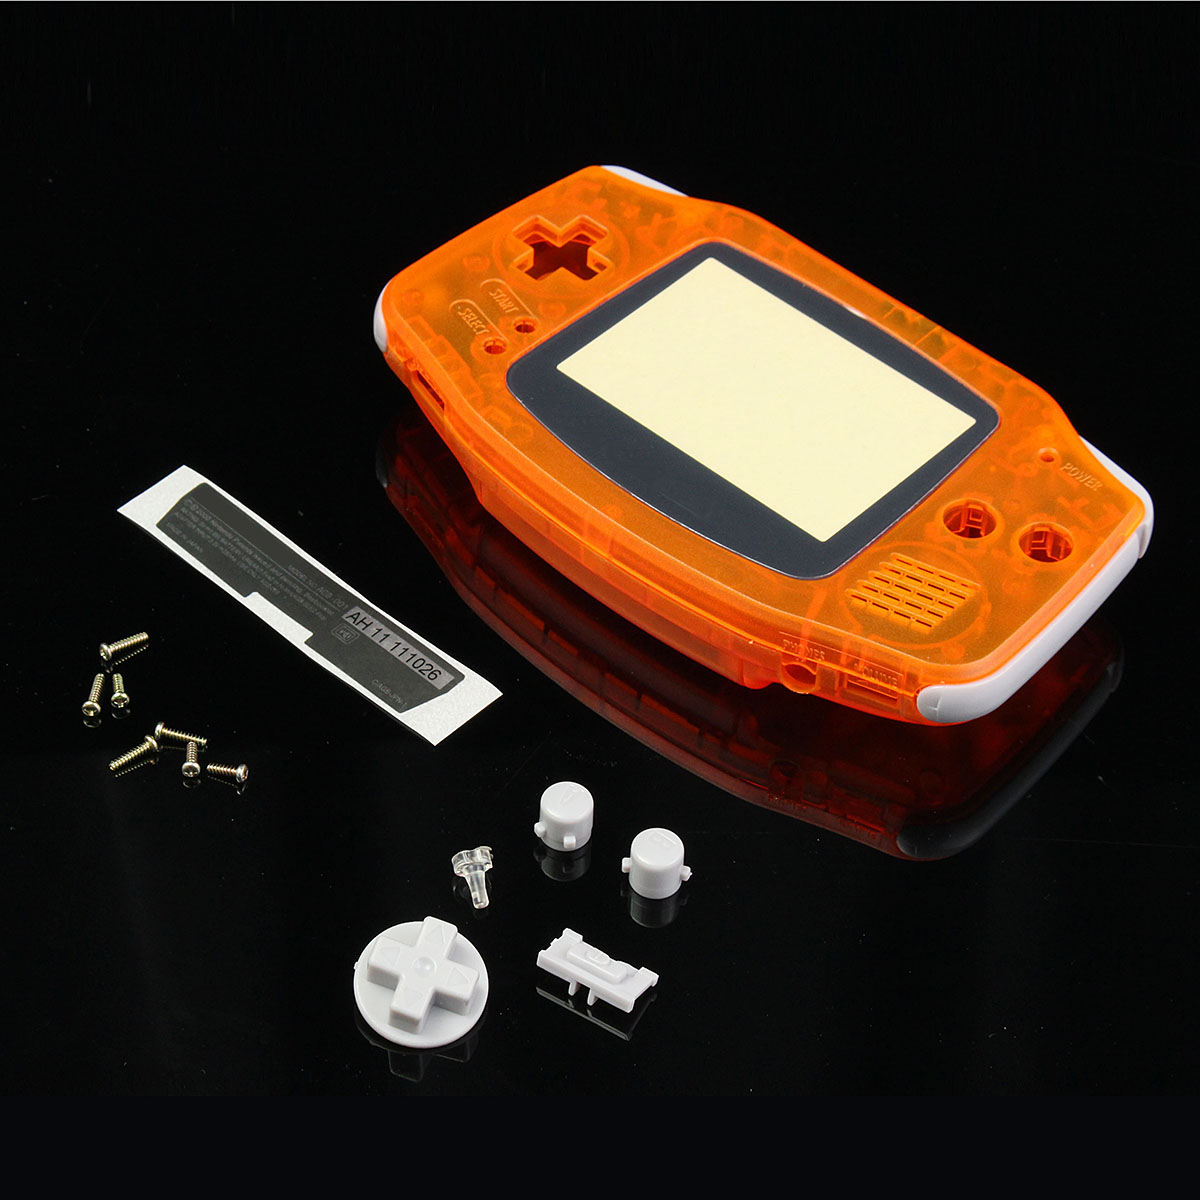 

Transparent Orange Shell Housing Case Cover For Nintendo Game Boy Advance GBA